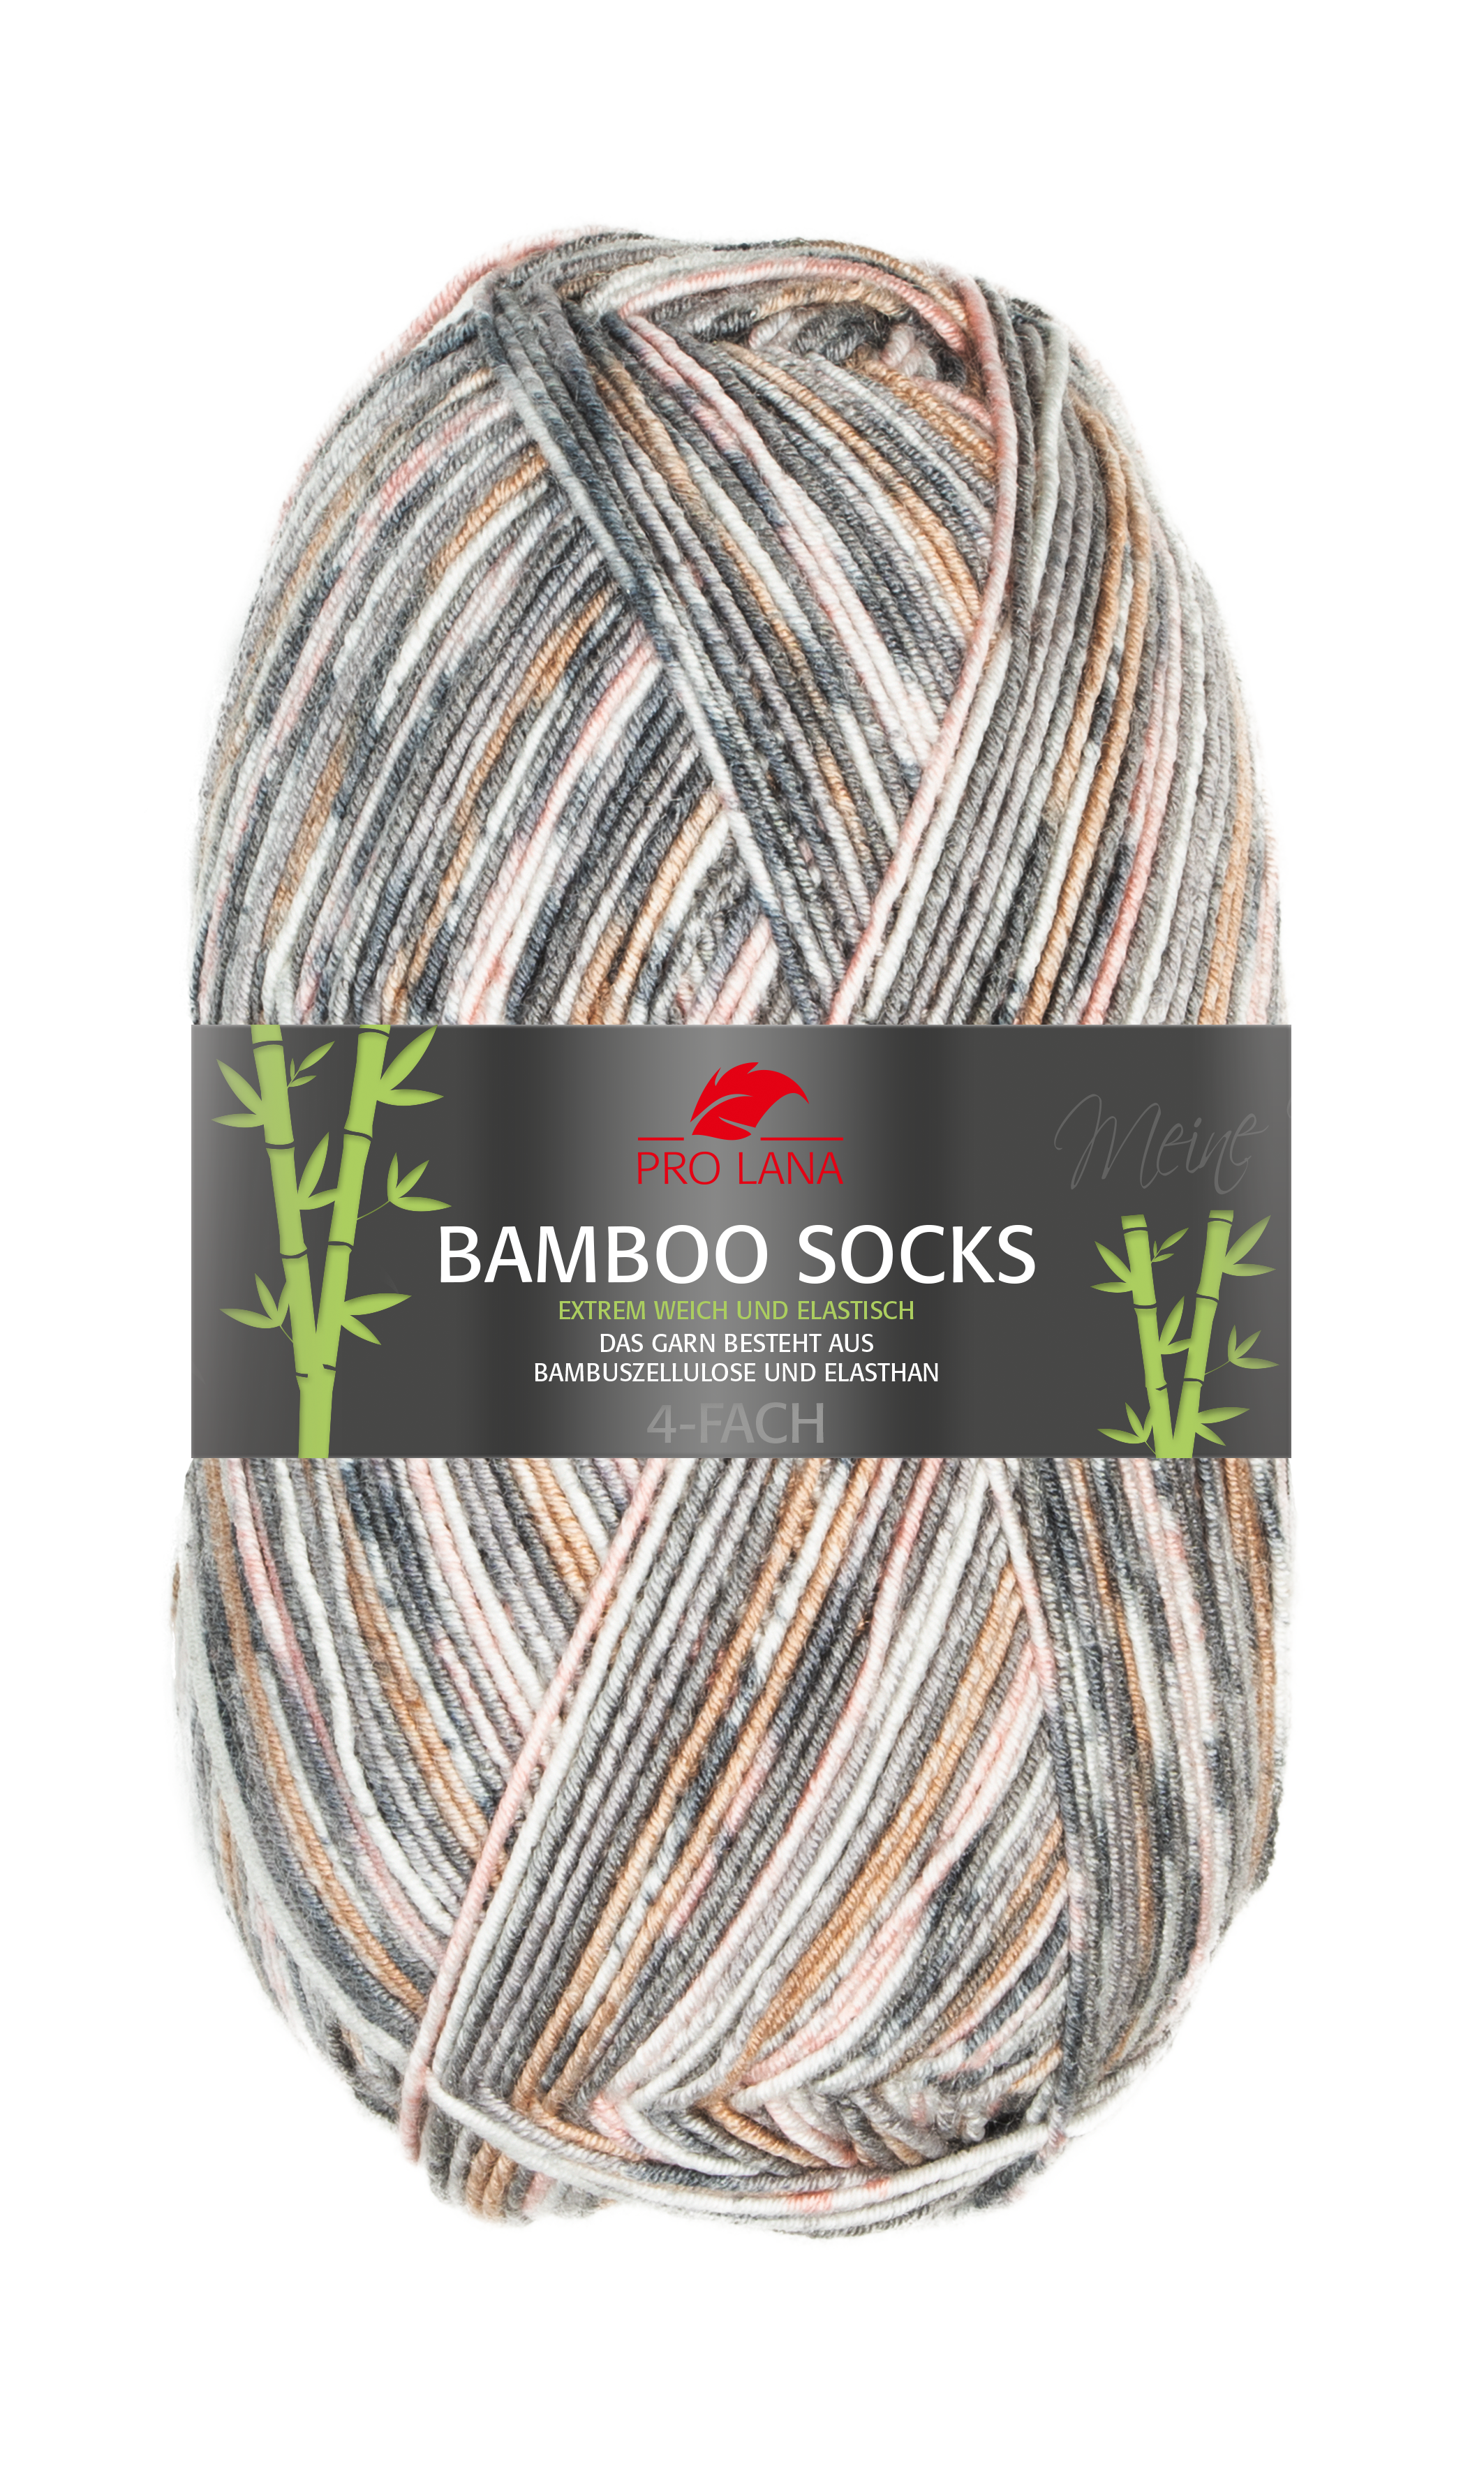 Bamboo Socks rosa/braun/grau meliert 